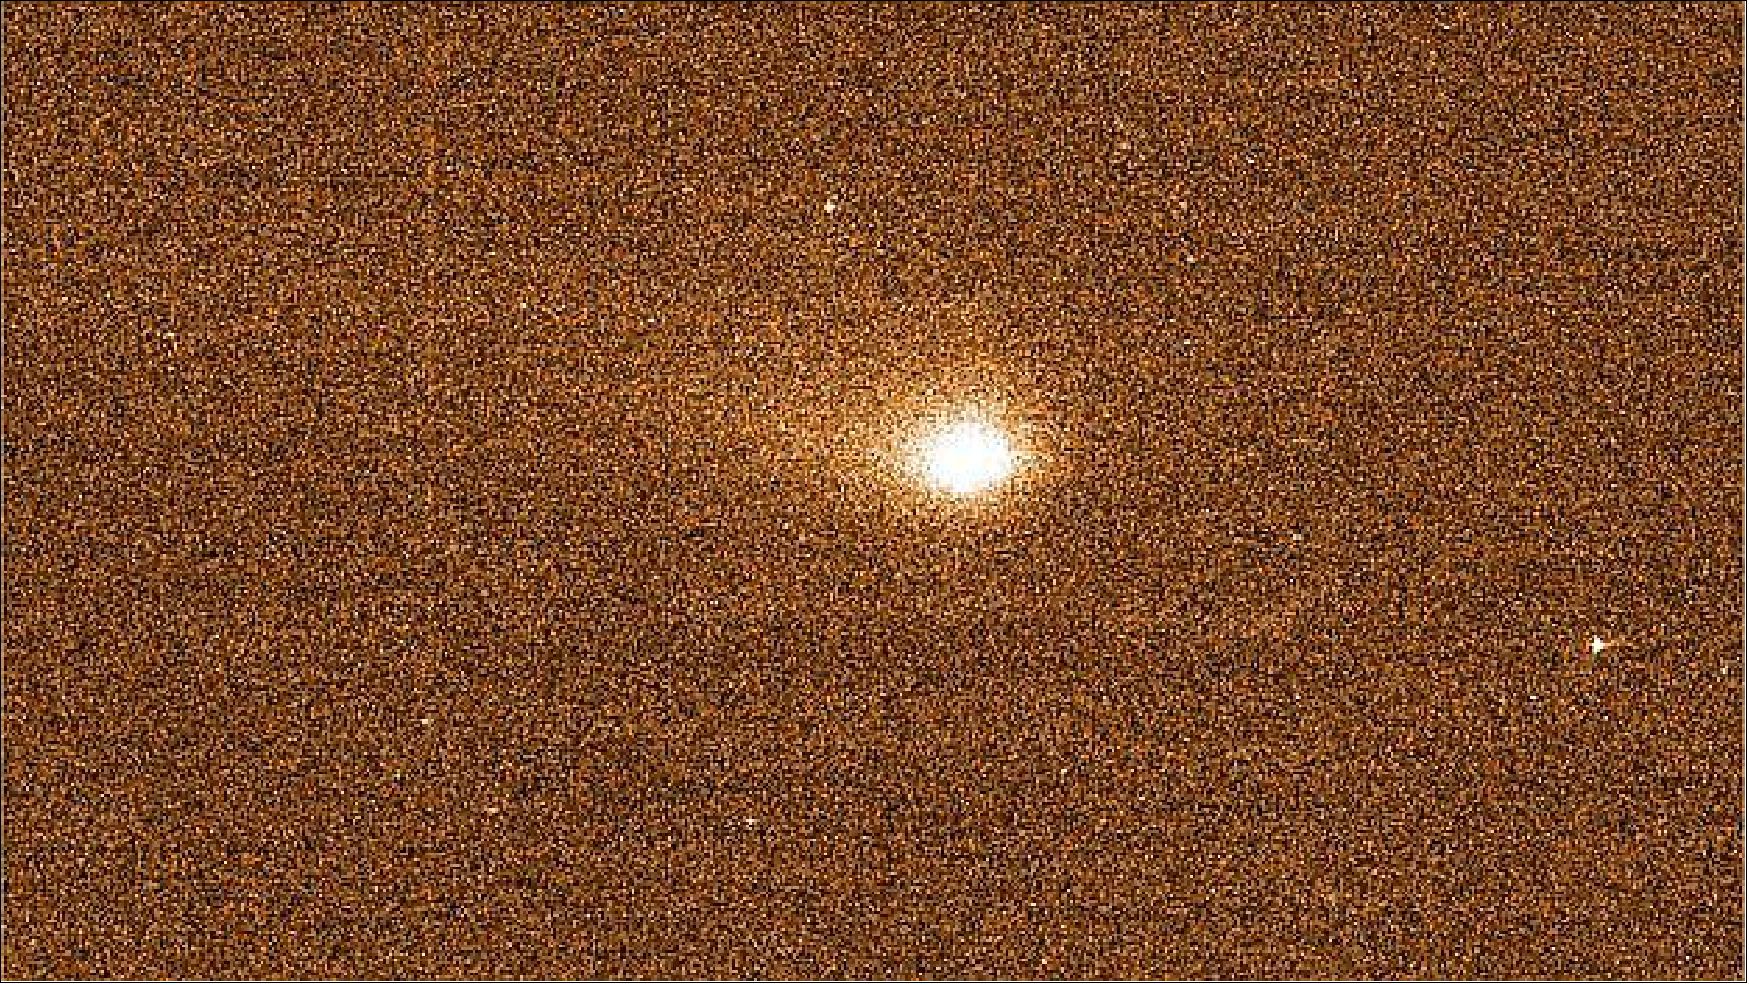 Figure 82: Rosetta comet seen by Gaia (image credit: ESA)